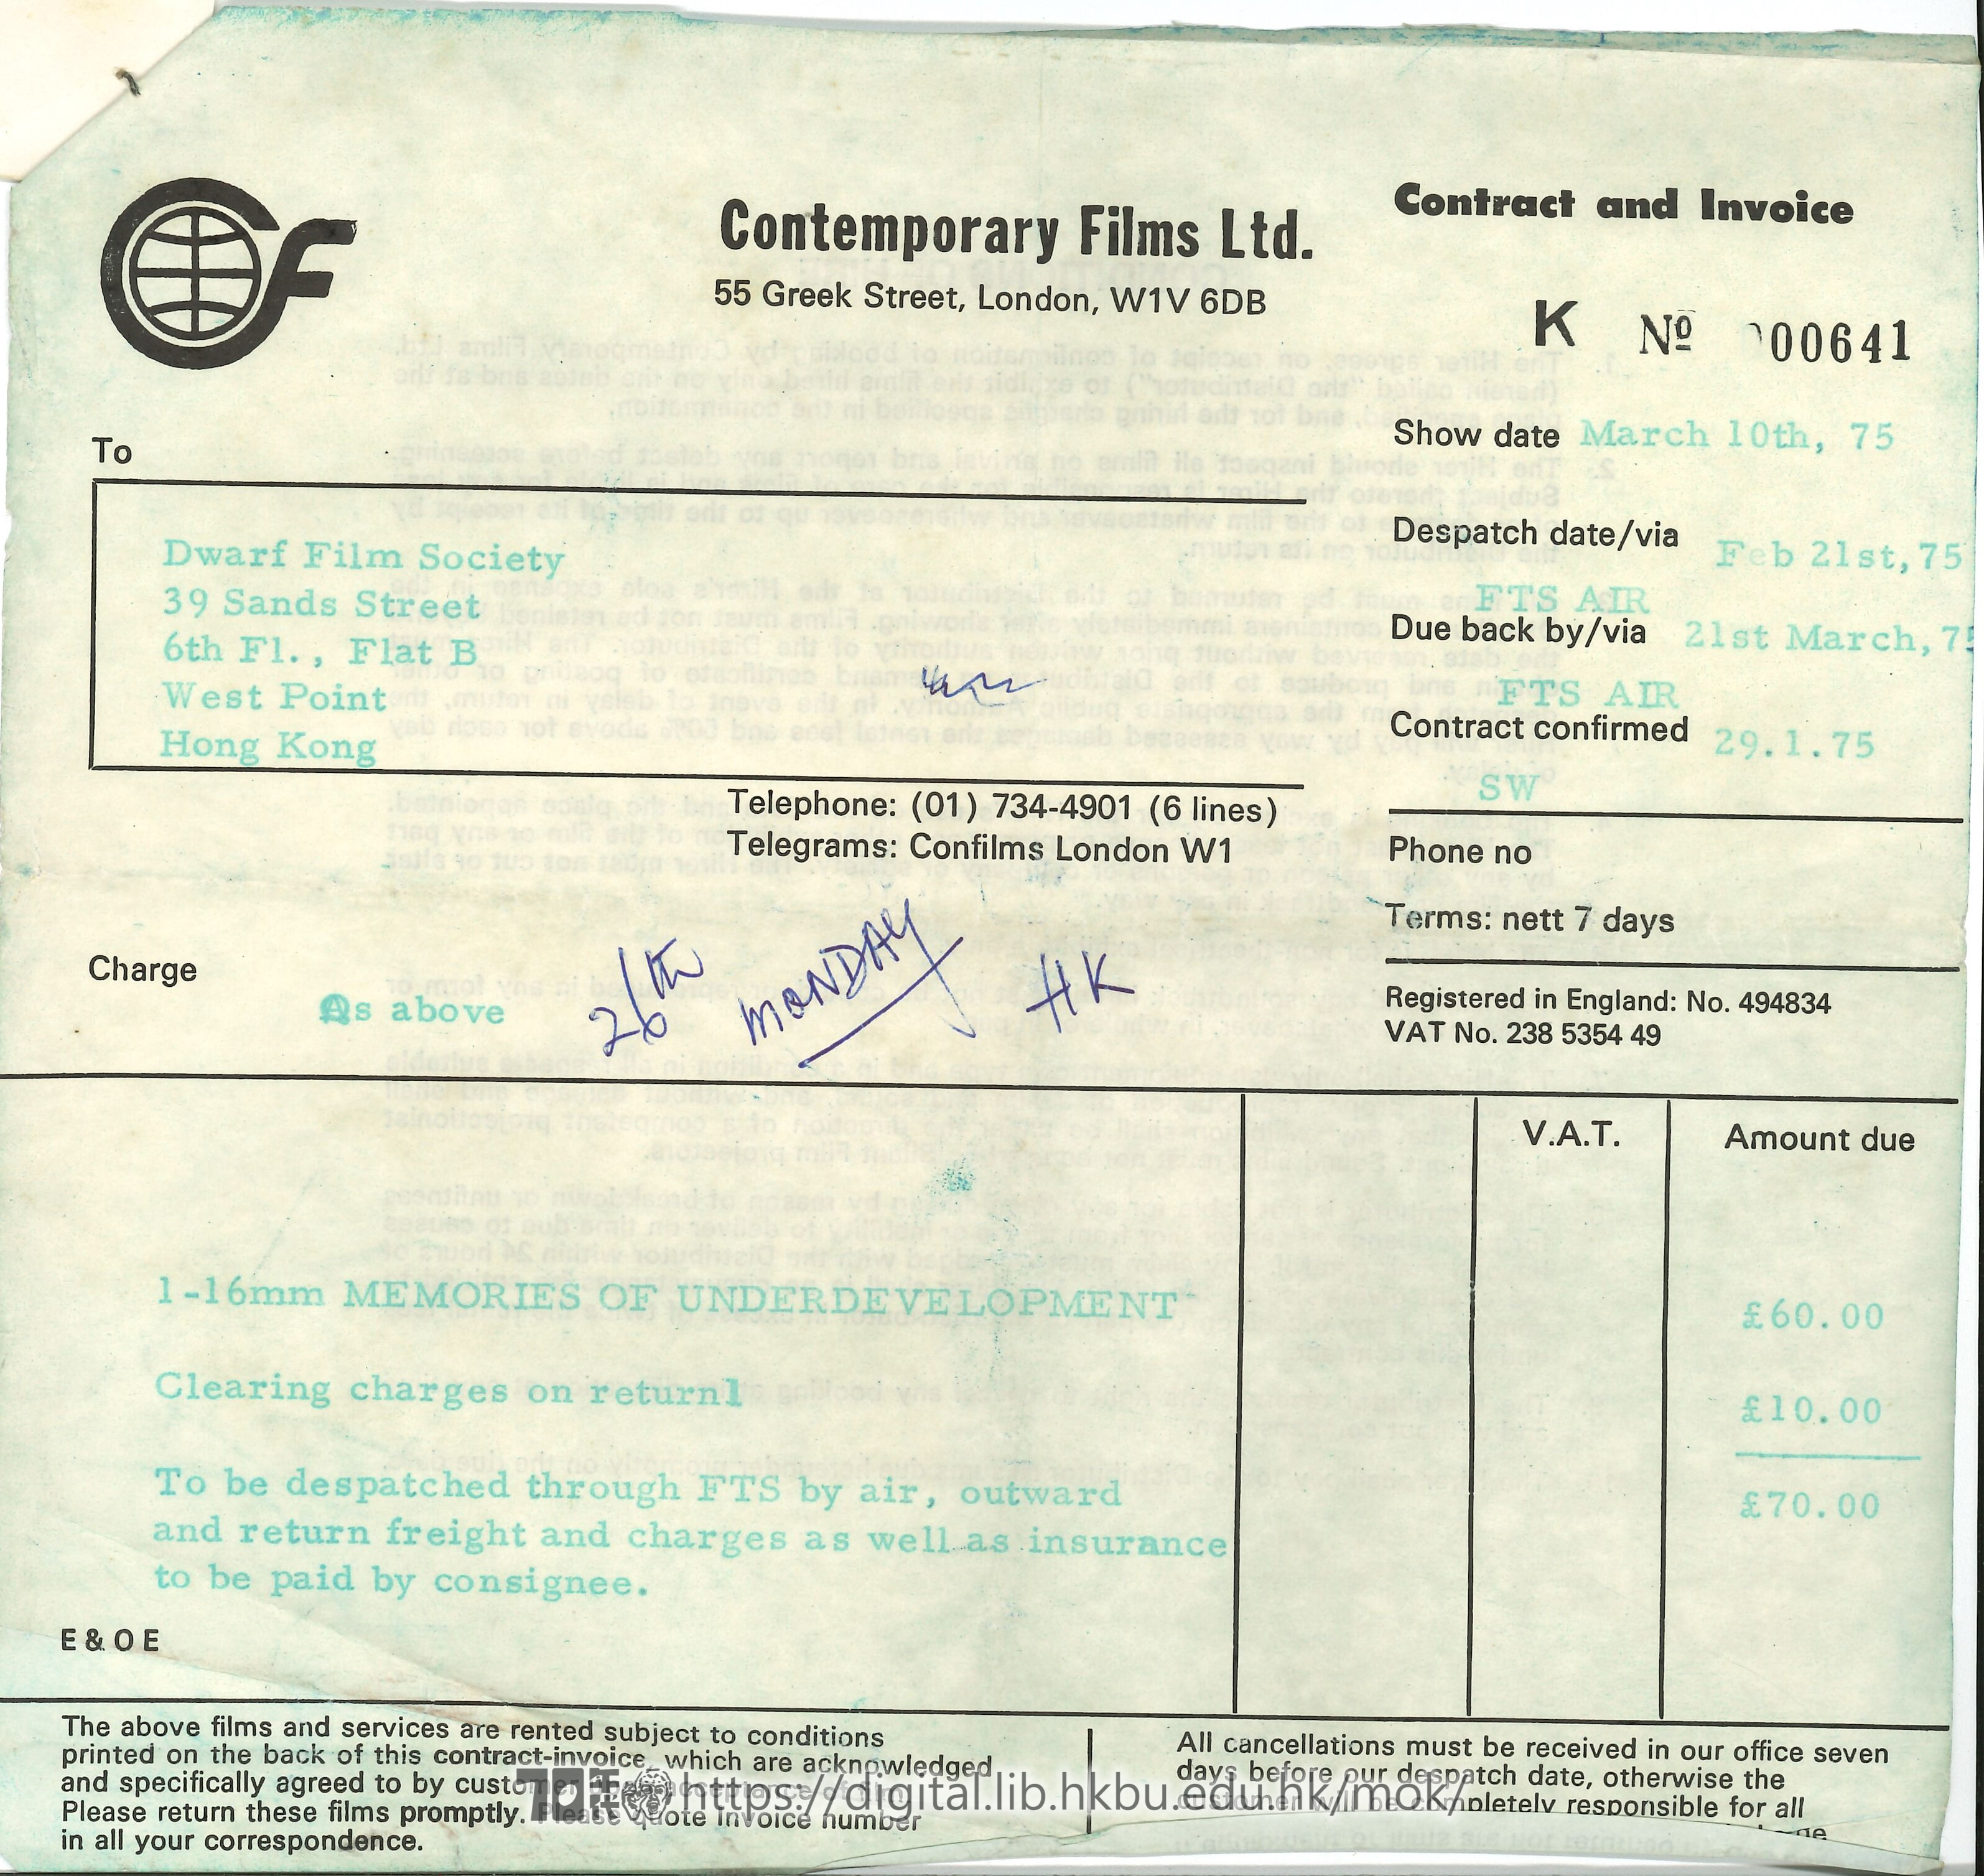   Invoice from Contemporary Film Ltd. Contemporary Film Ltd. 